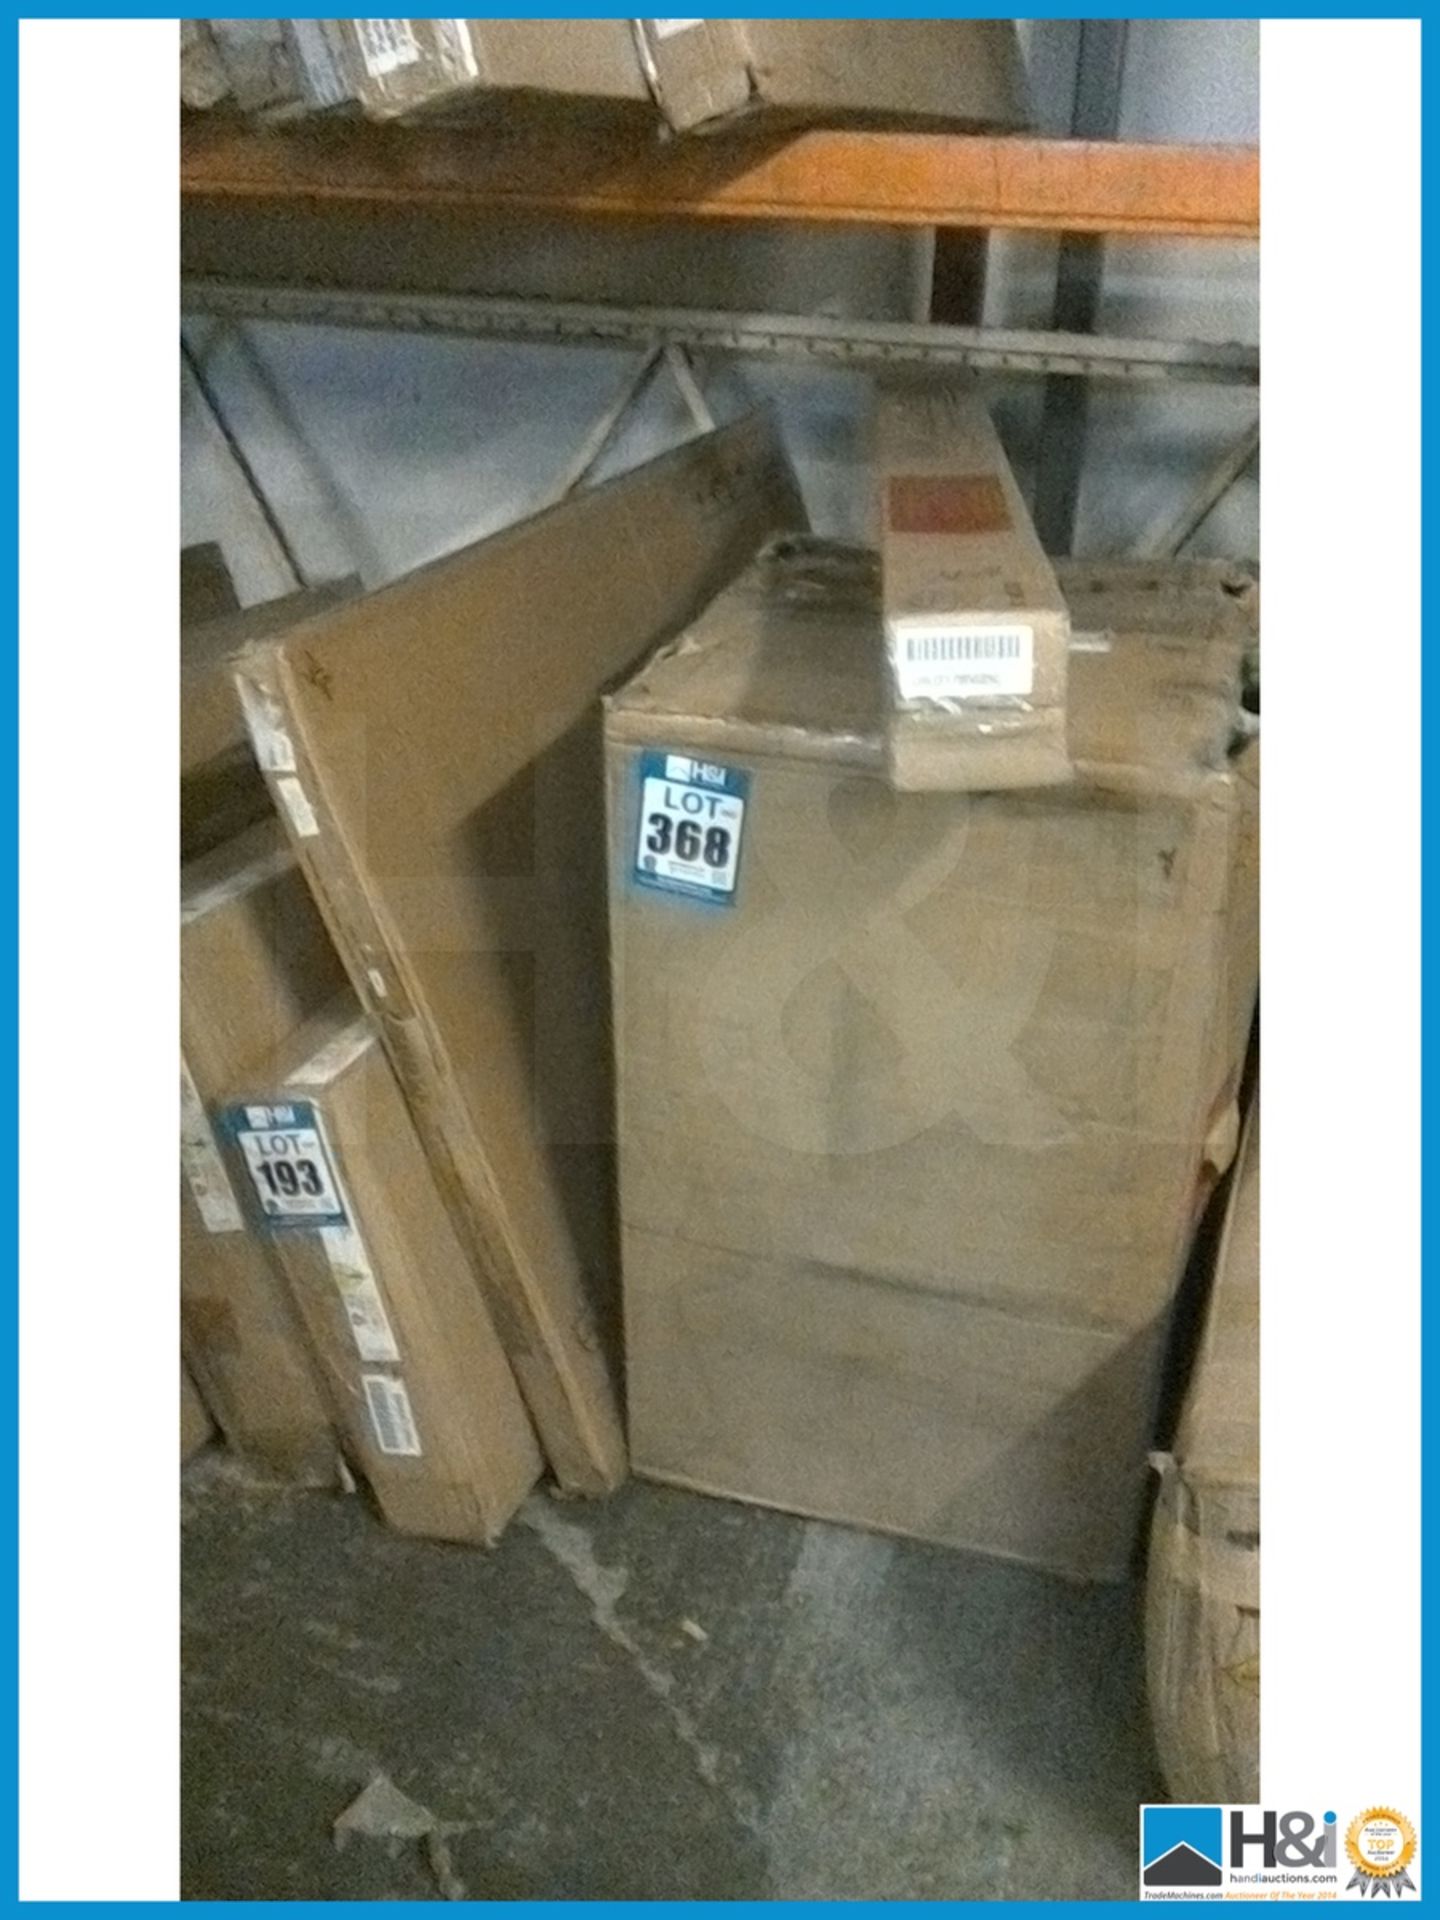 DAMAGED BOX ITEM A1 BARCELONA 8 PIECE GARDEN SET [BLACK] 71 x 98 x 167cm RRP £967 Appraisal: Viewing - Image 2 of 3